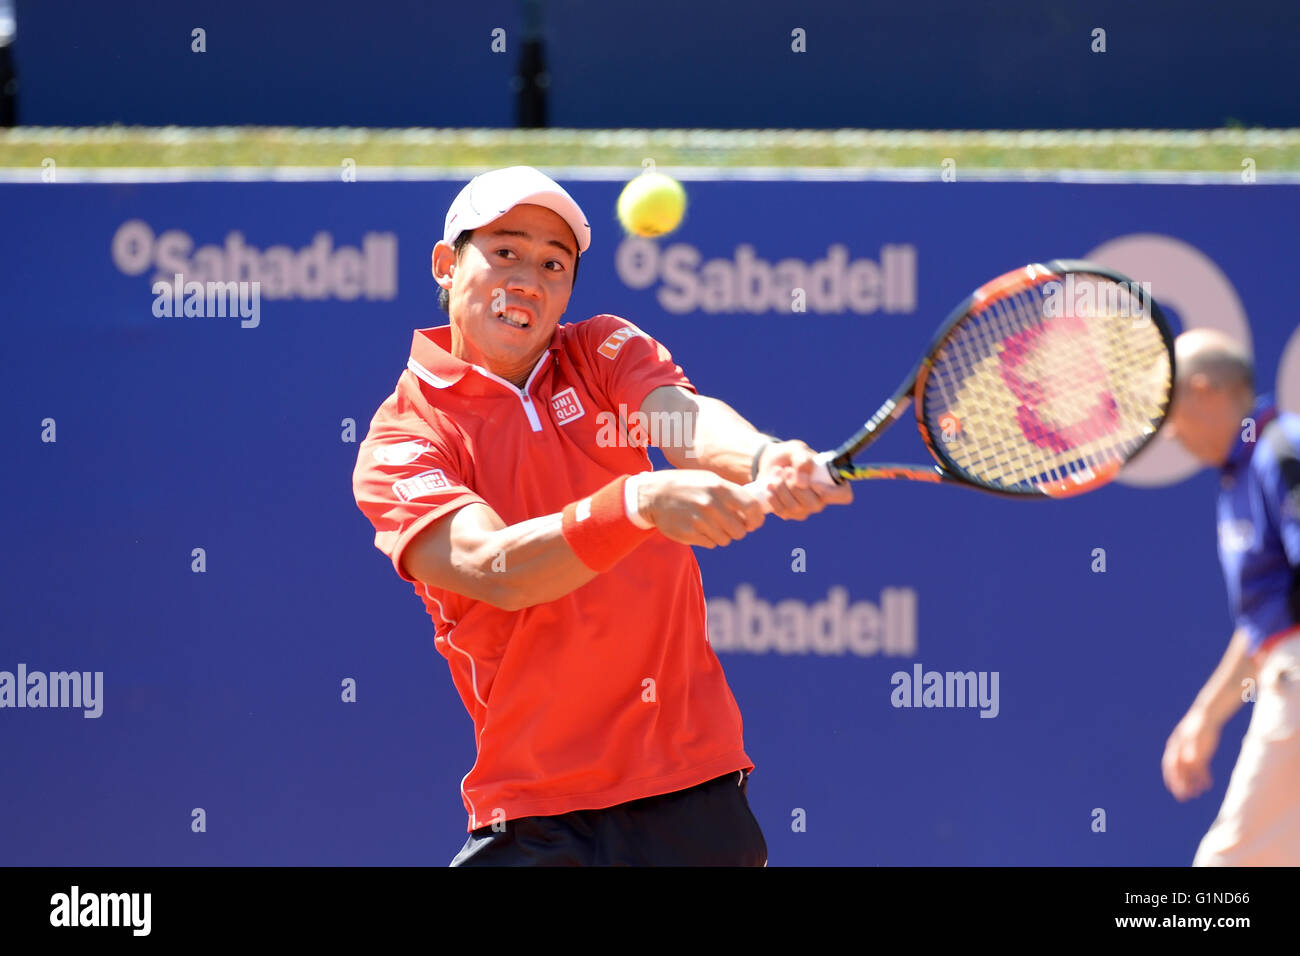 BARCELONA - 21 APR: Kei Nishikori (japanische Tennisspielerin) spielt bei der ATP Barcelona Open Banc Sabadell. Stockfoto